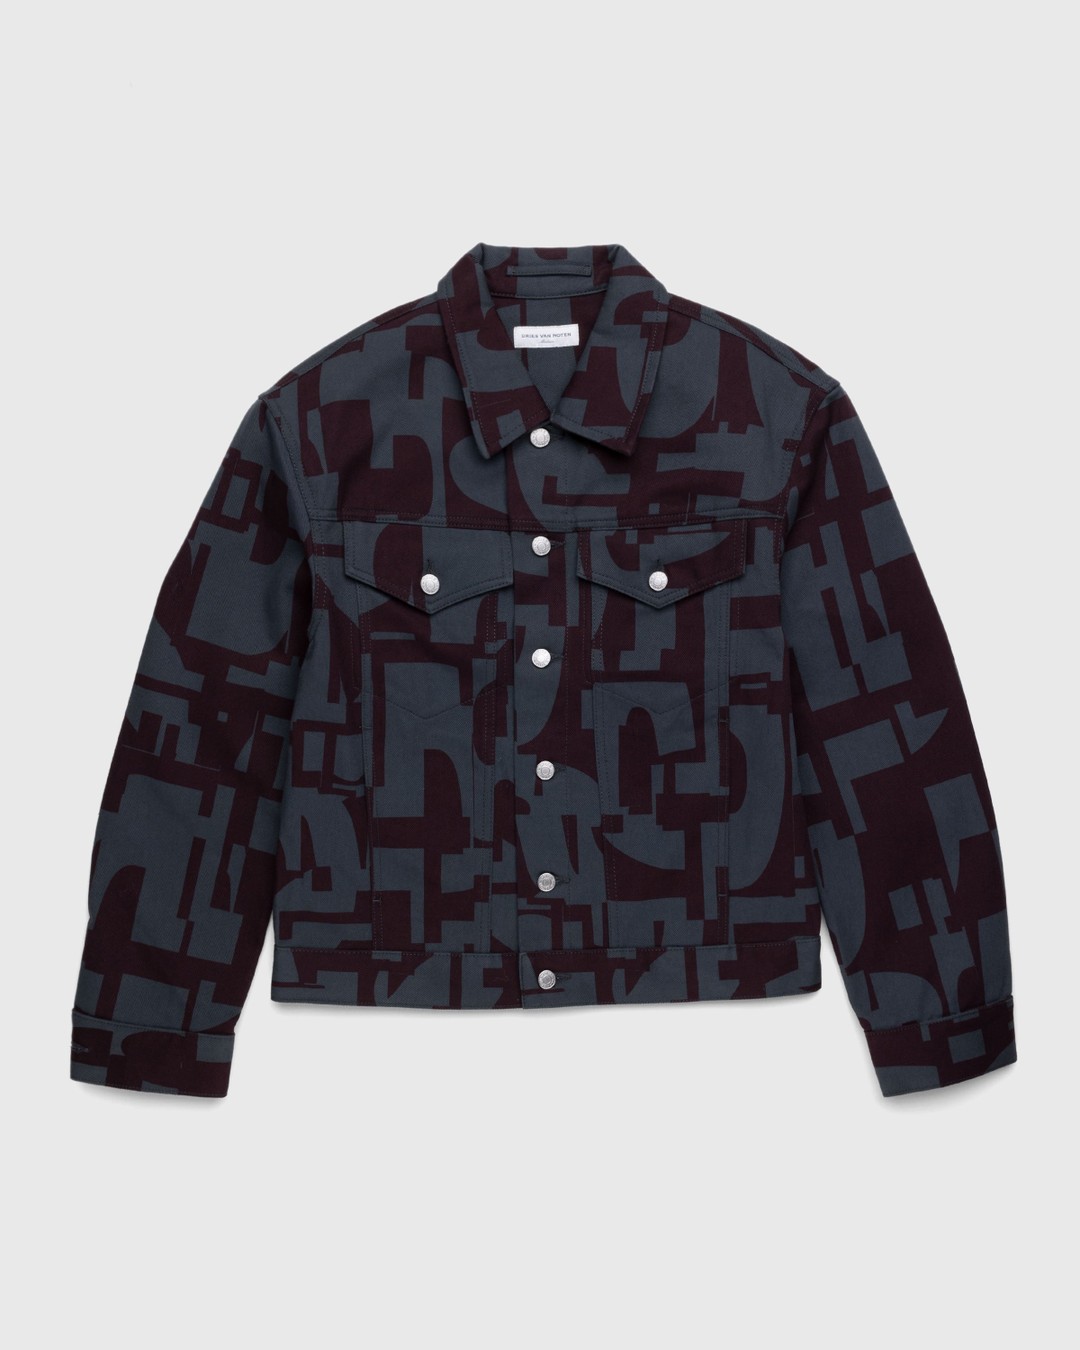 Dries van Noten – Vuskin Denim Jacket Multi - Outerwear - Black - Image 1